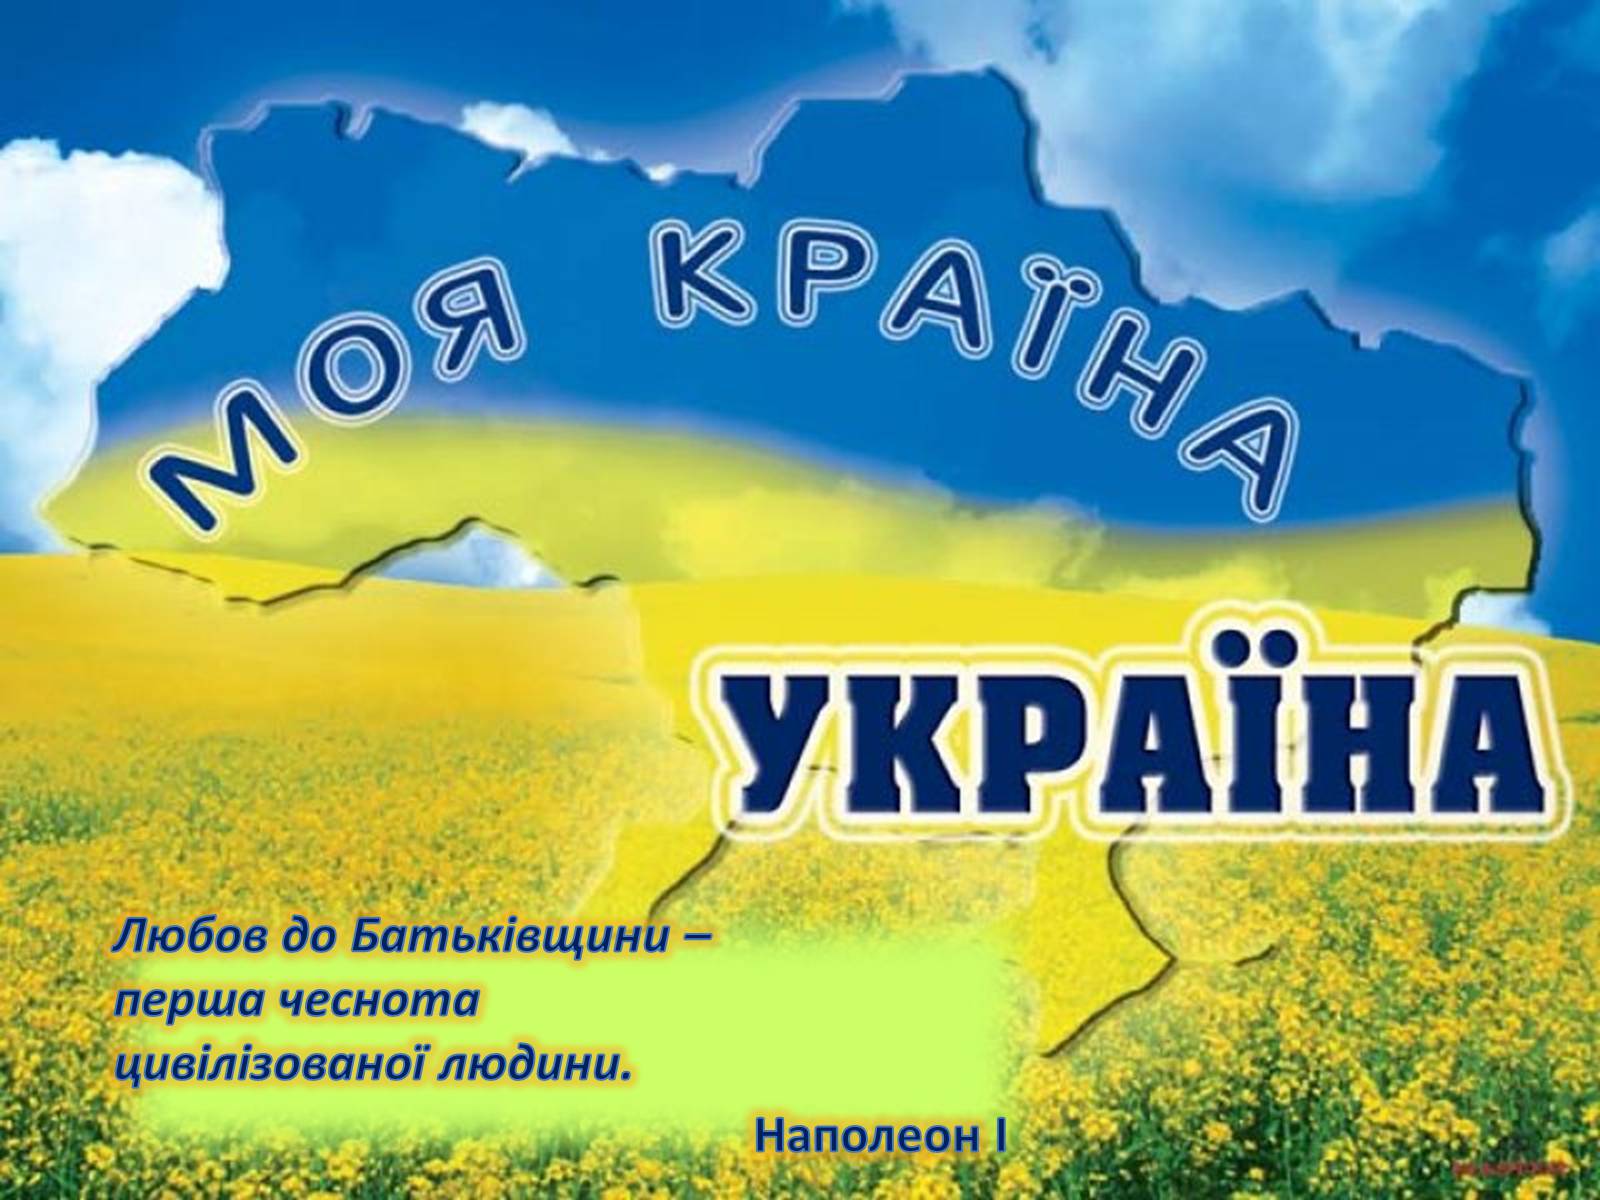 Украина моя Родина